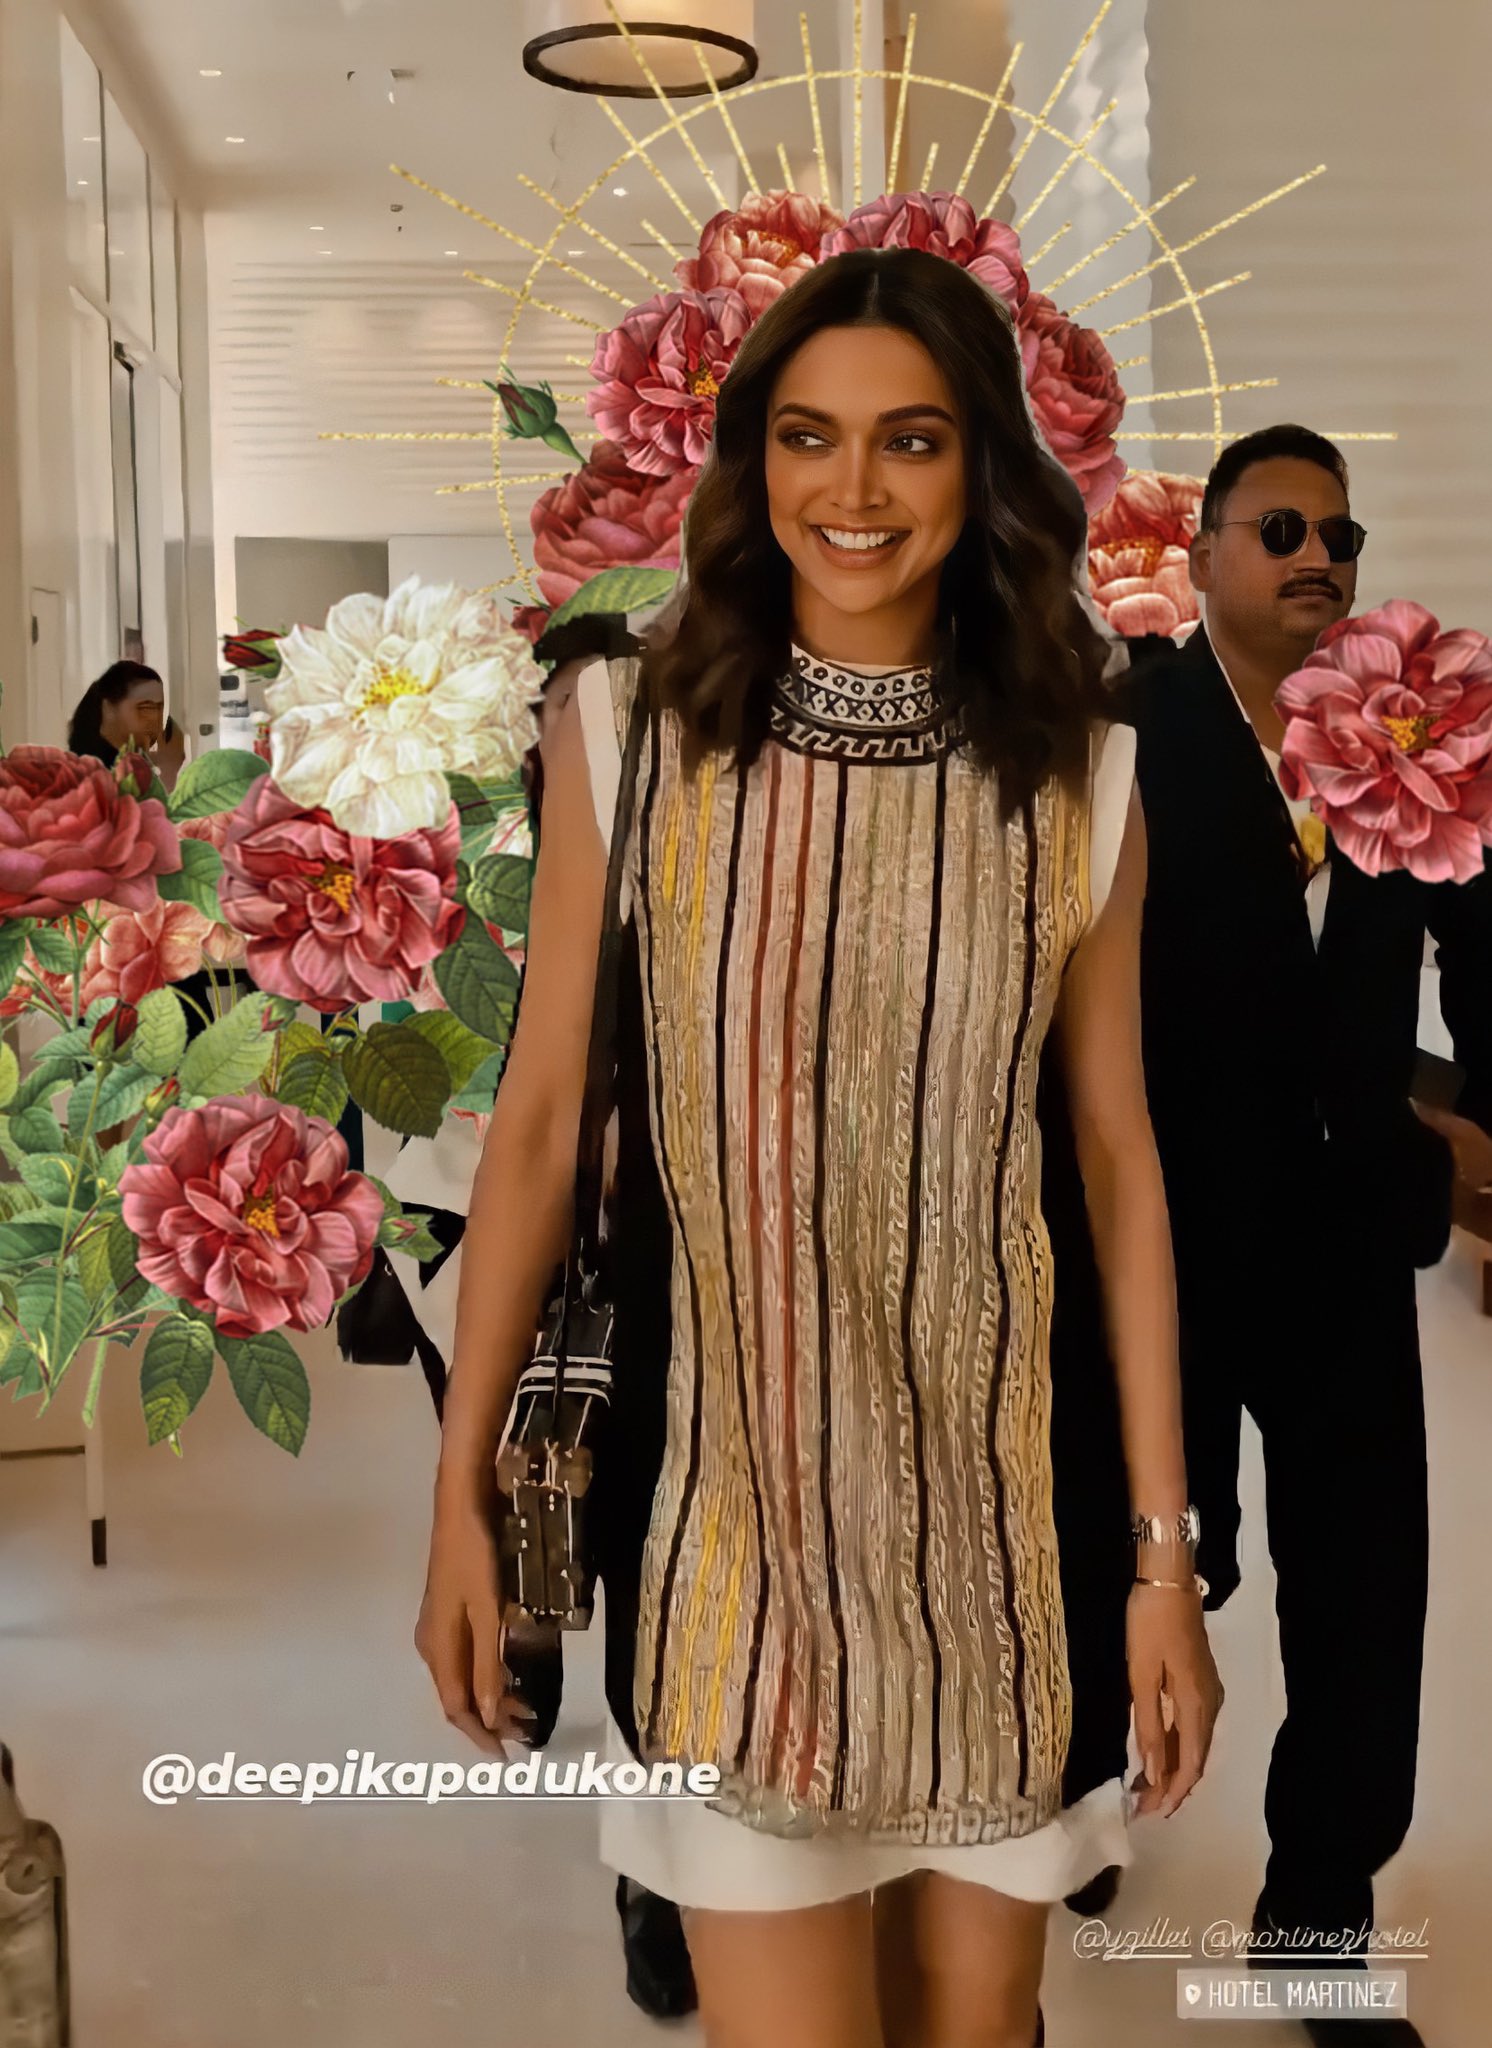 Deepika Padukone's minimalist Louis Vuitton ad gets mixed response